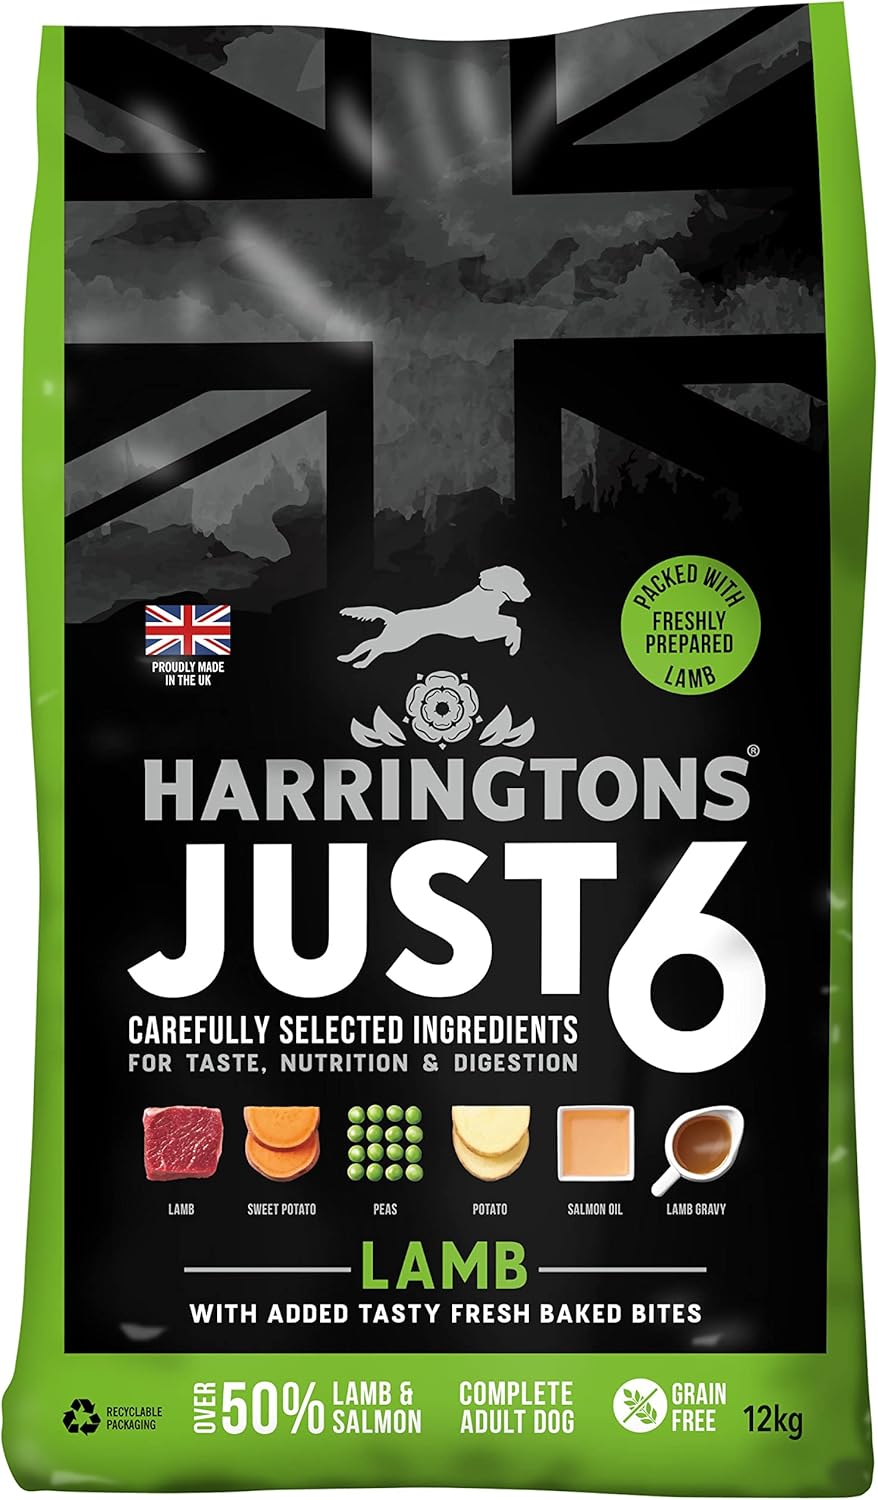 Harringtons Just 6 Lamb & Veg Complete Grain Free Dry Dog Food With Added Tasty Fresh Baked Bites 12kg?HARRJ6L-12